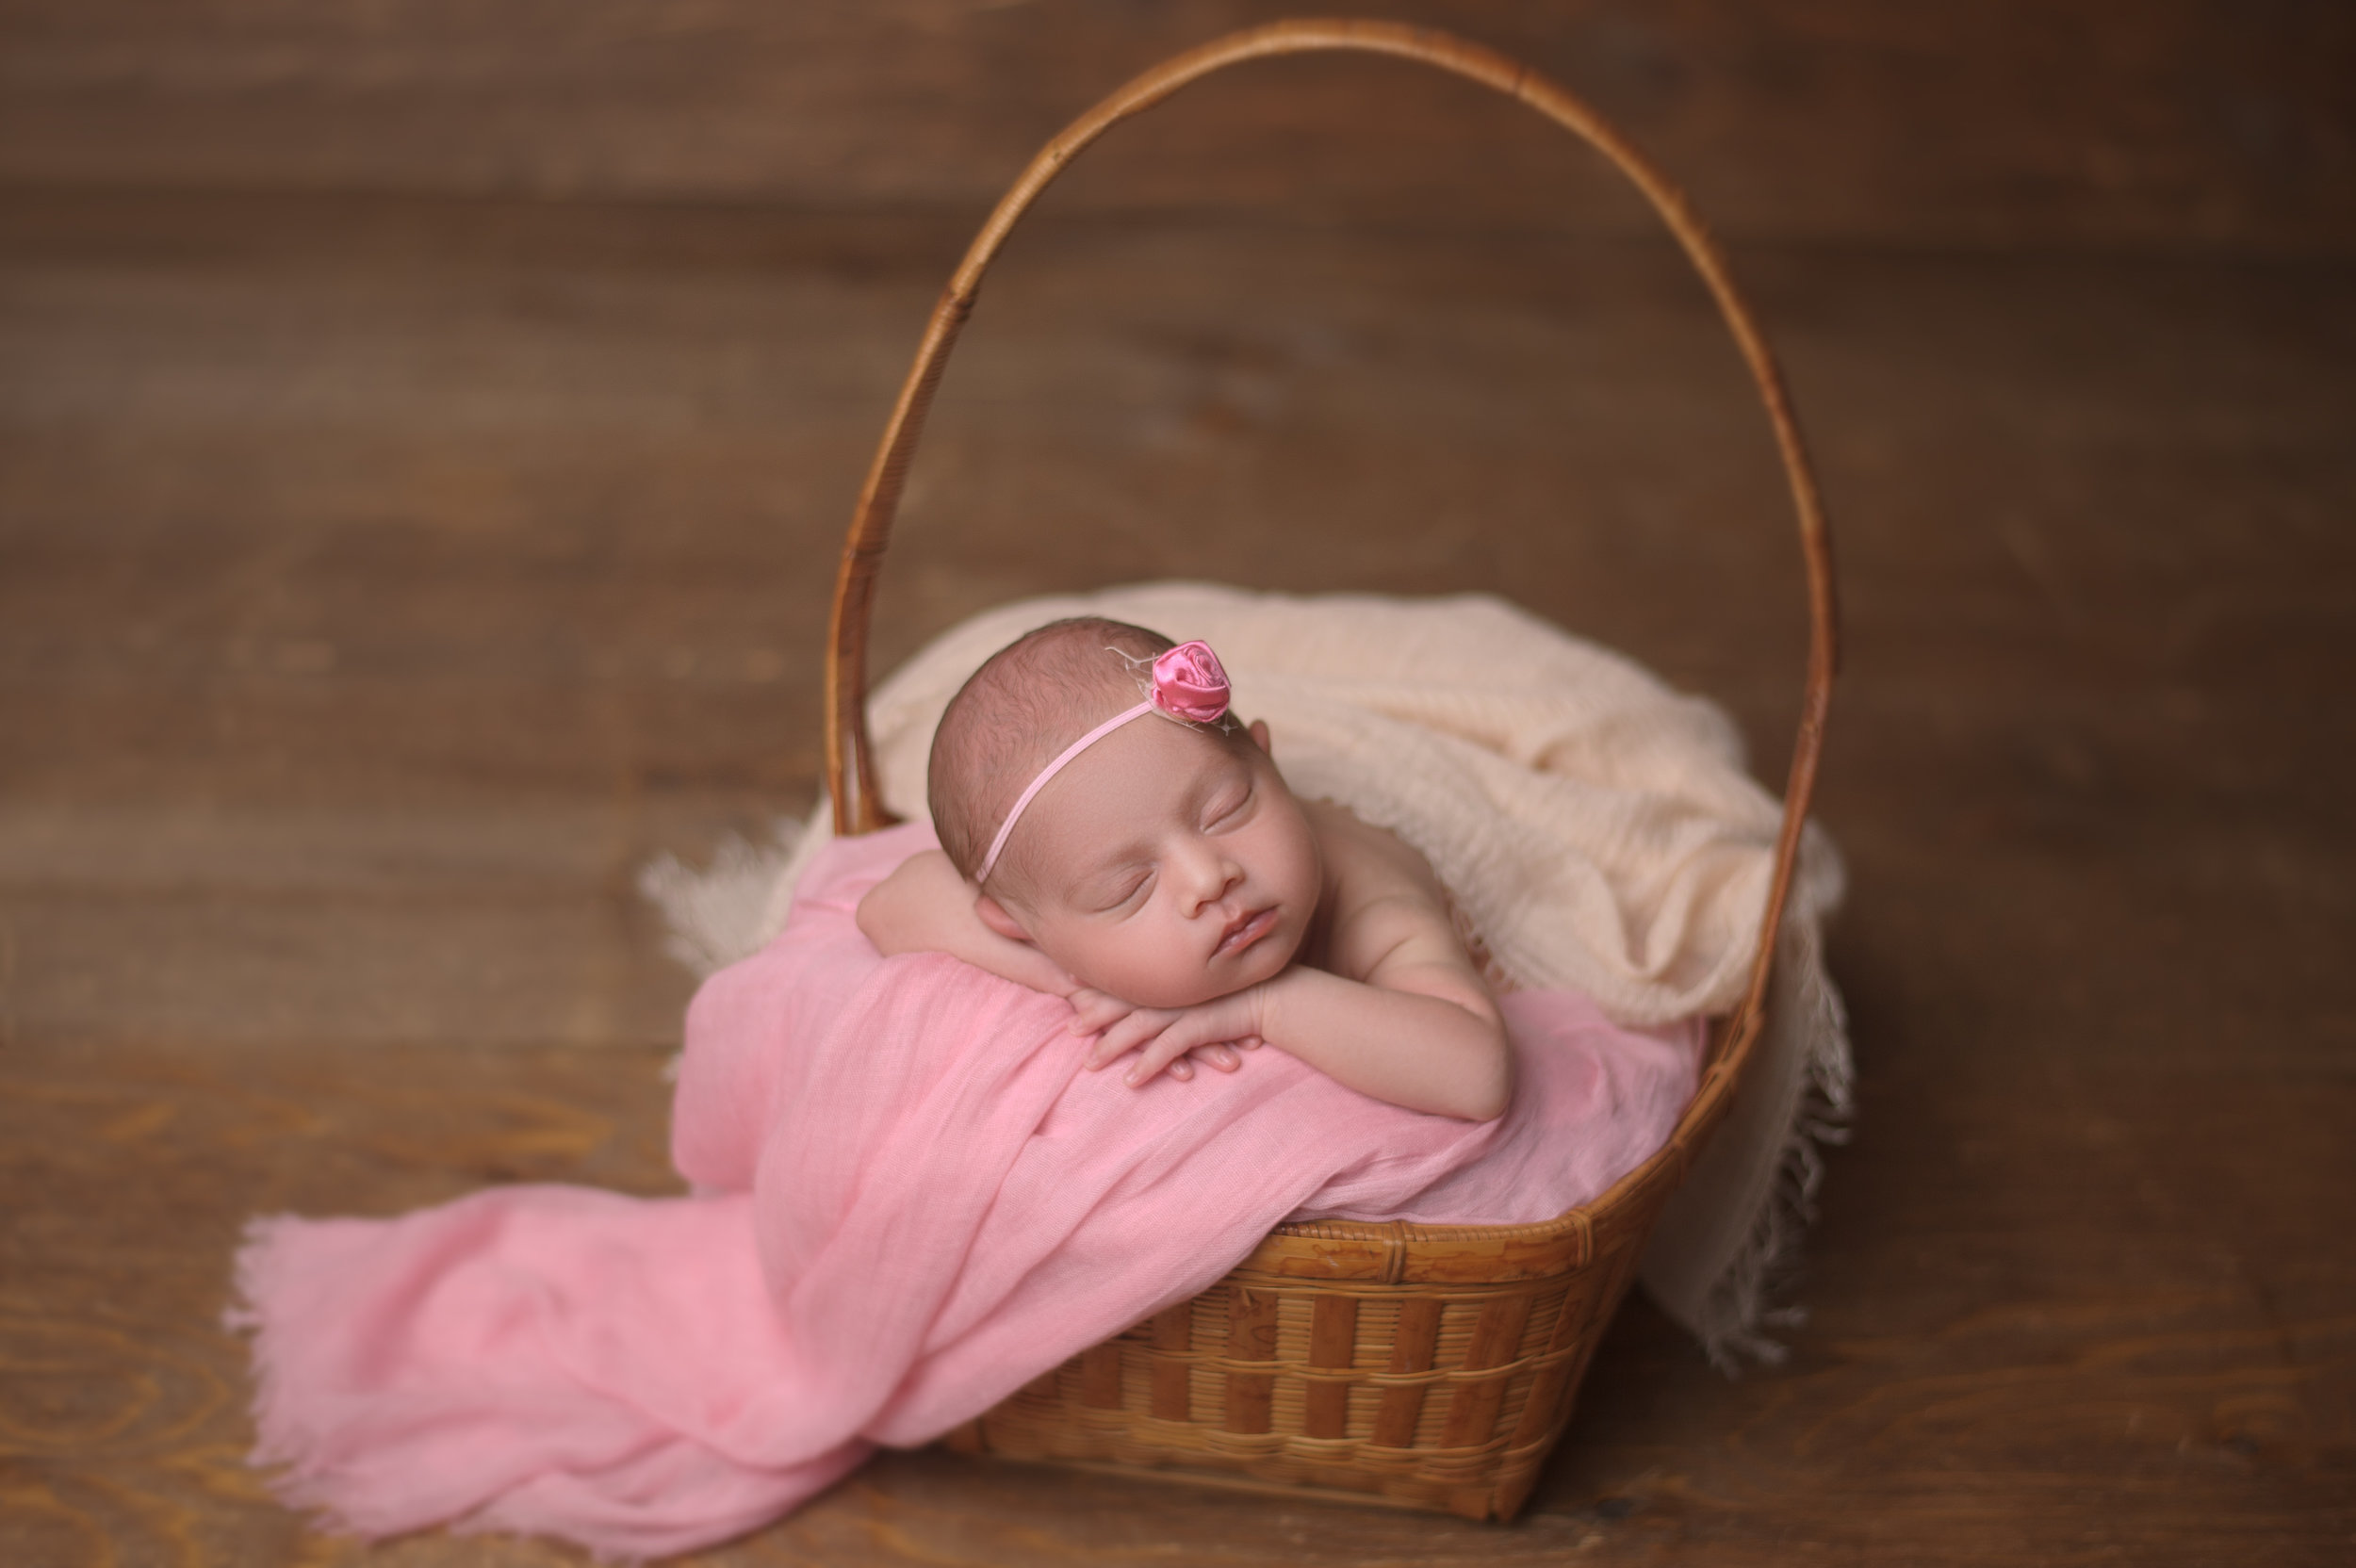 Newborn baby adorned with floral headband